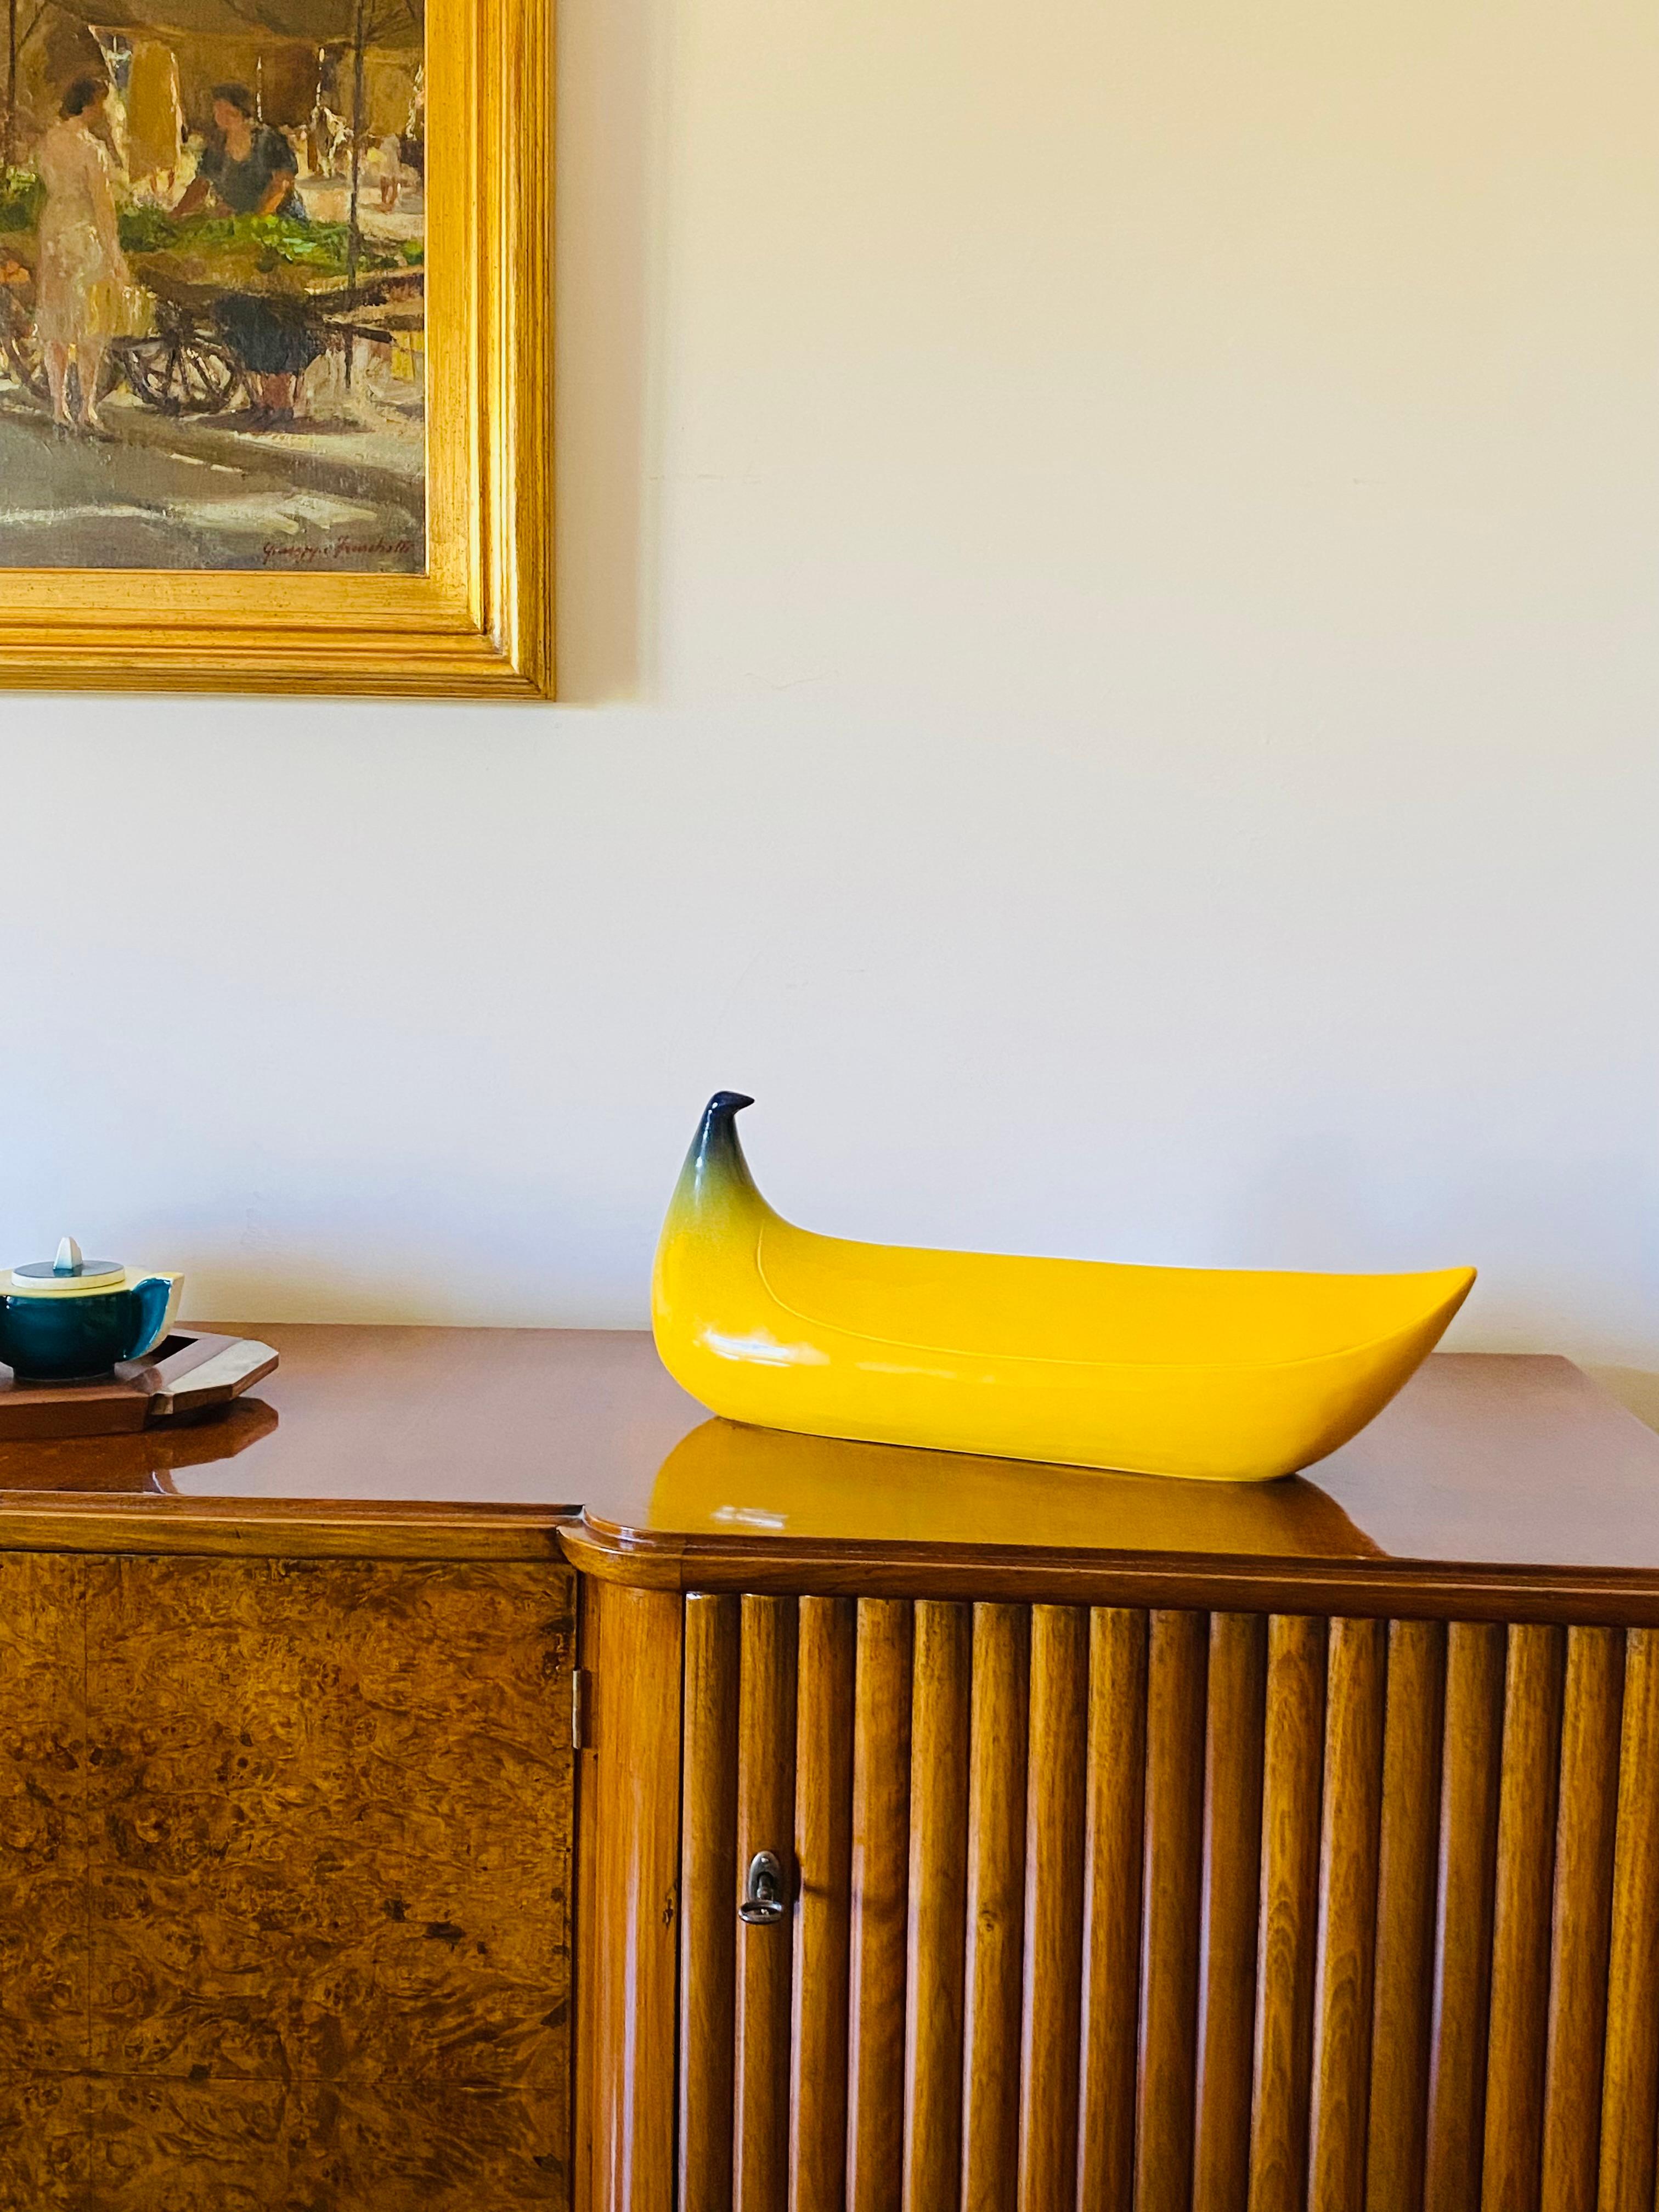 Yellow banana ceramic sculpture

Zanolli Nove Italy, circa 1970

Measures: 48 x 15 x 20 cm

Conditions: Excellent.